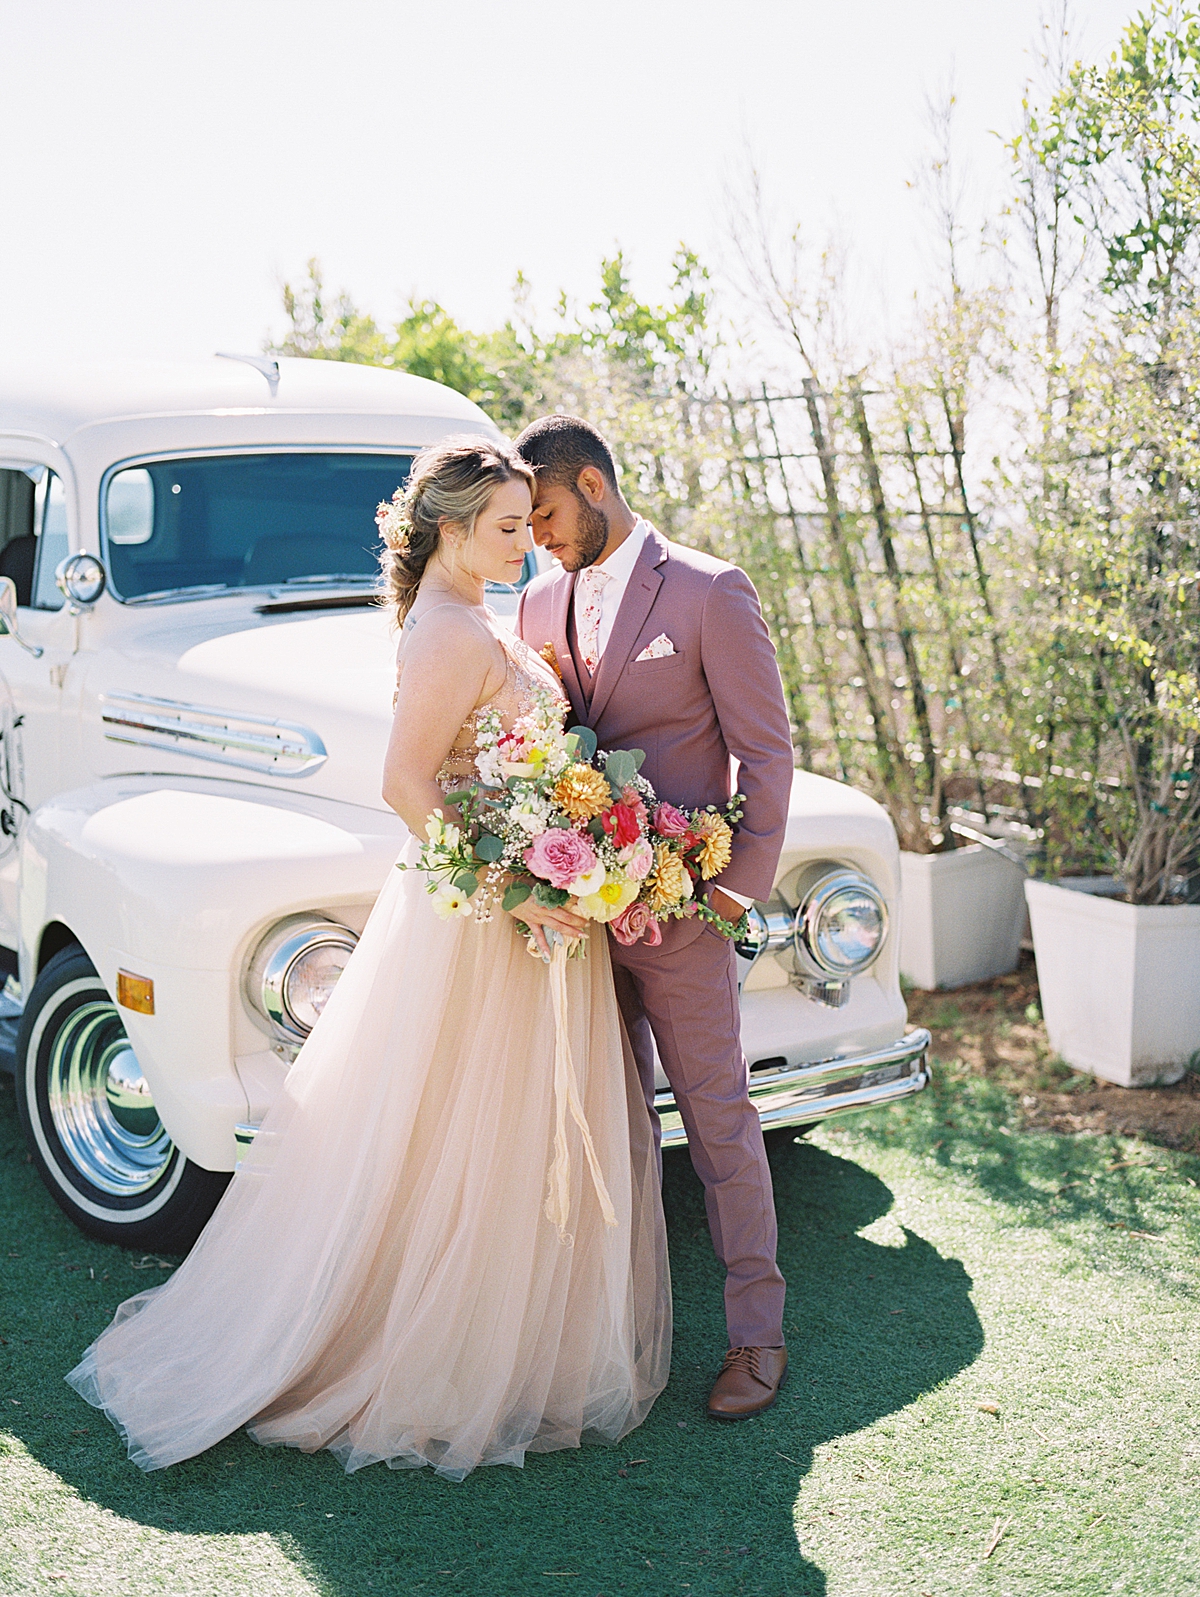 Las Mariposas Estate Wedding Inspiration - San Diego Wedding Photographer